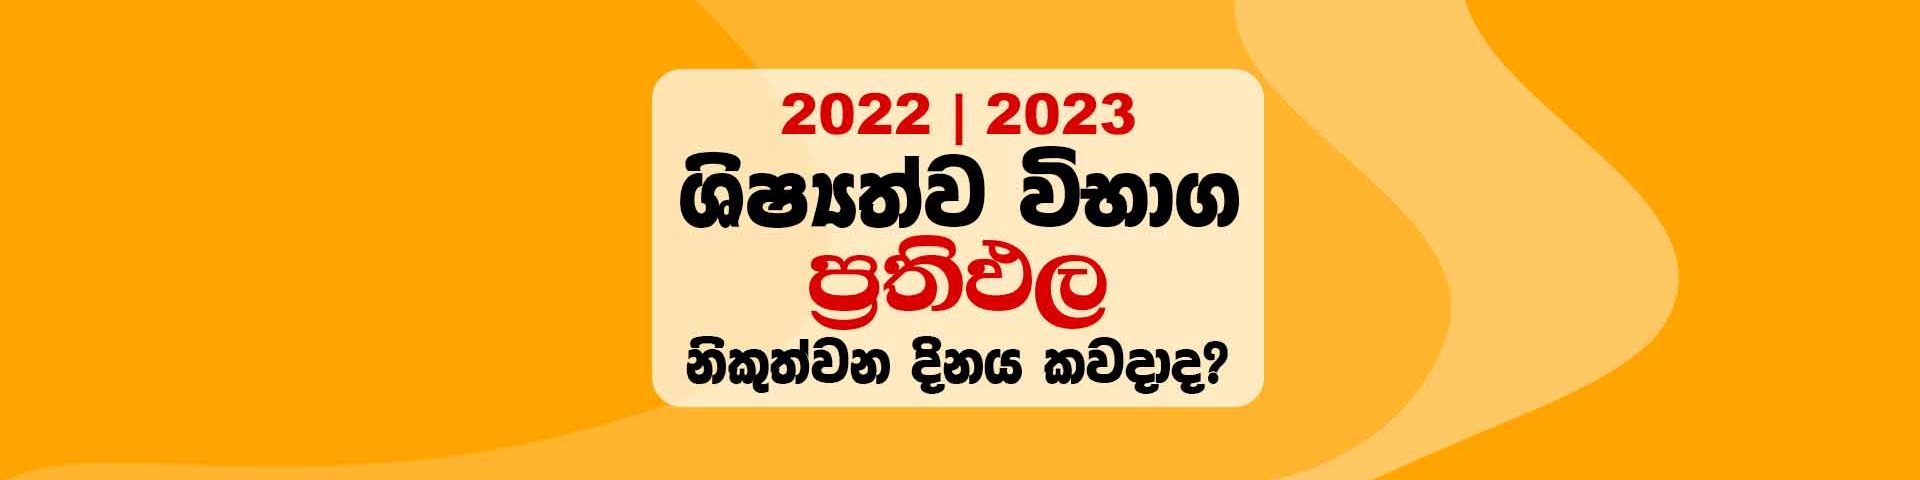 2022 Grade 5 Scholarship Results Release Date & Cut off mark 2022, 2022 shishyathwa vibhagaya